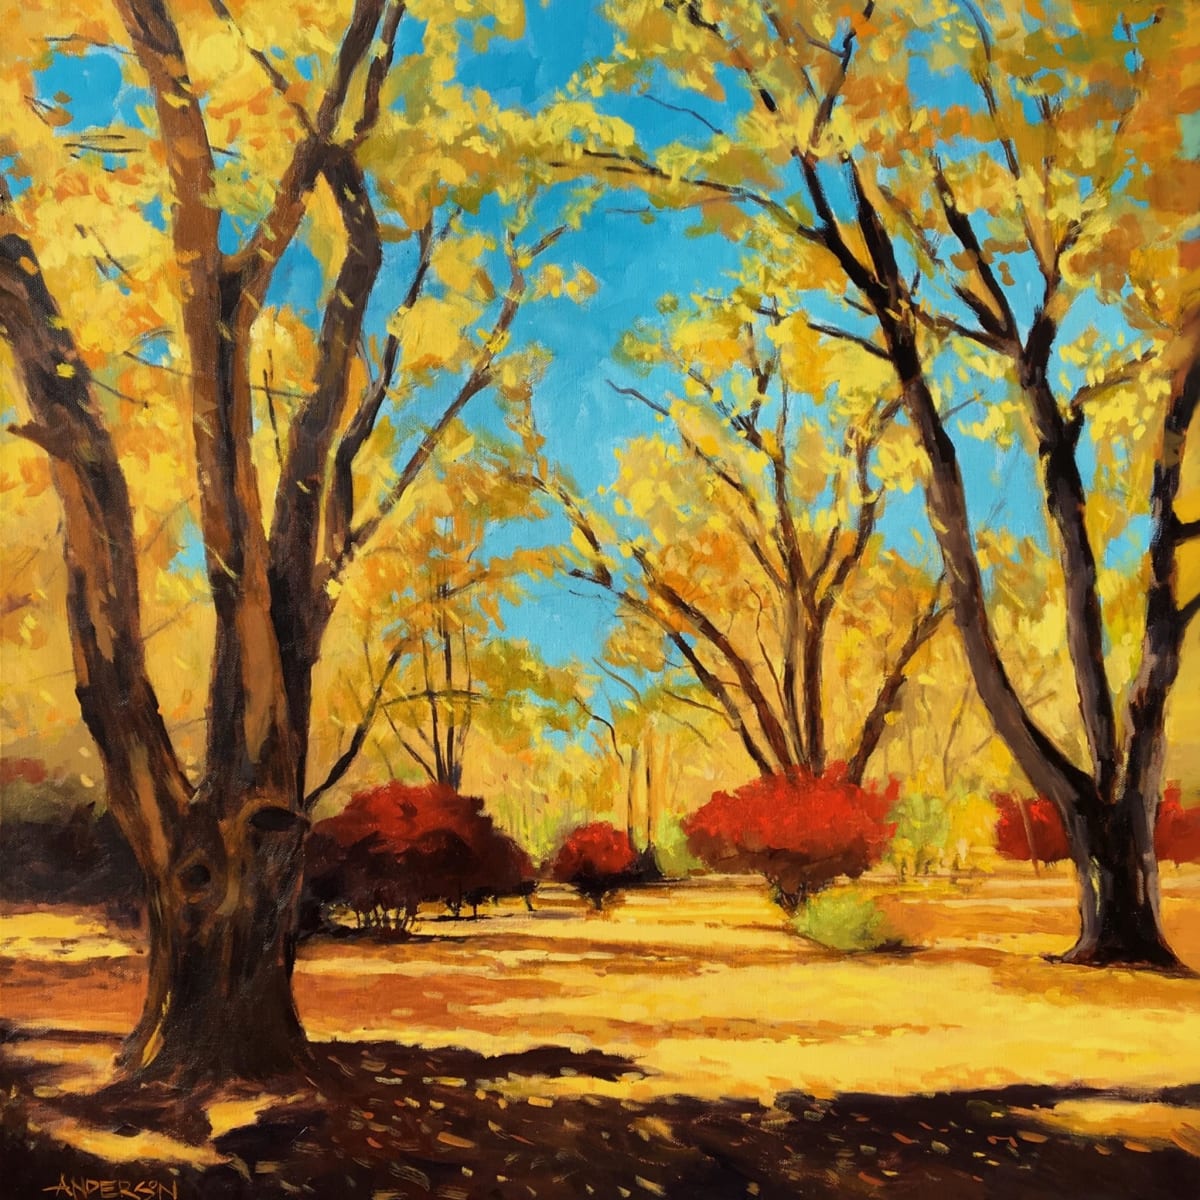 Autumn Scene by Michael Anderson 